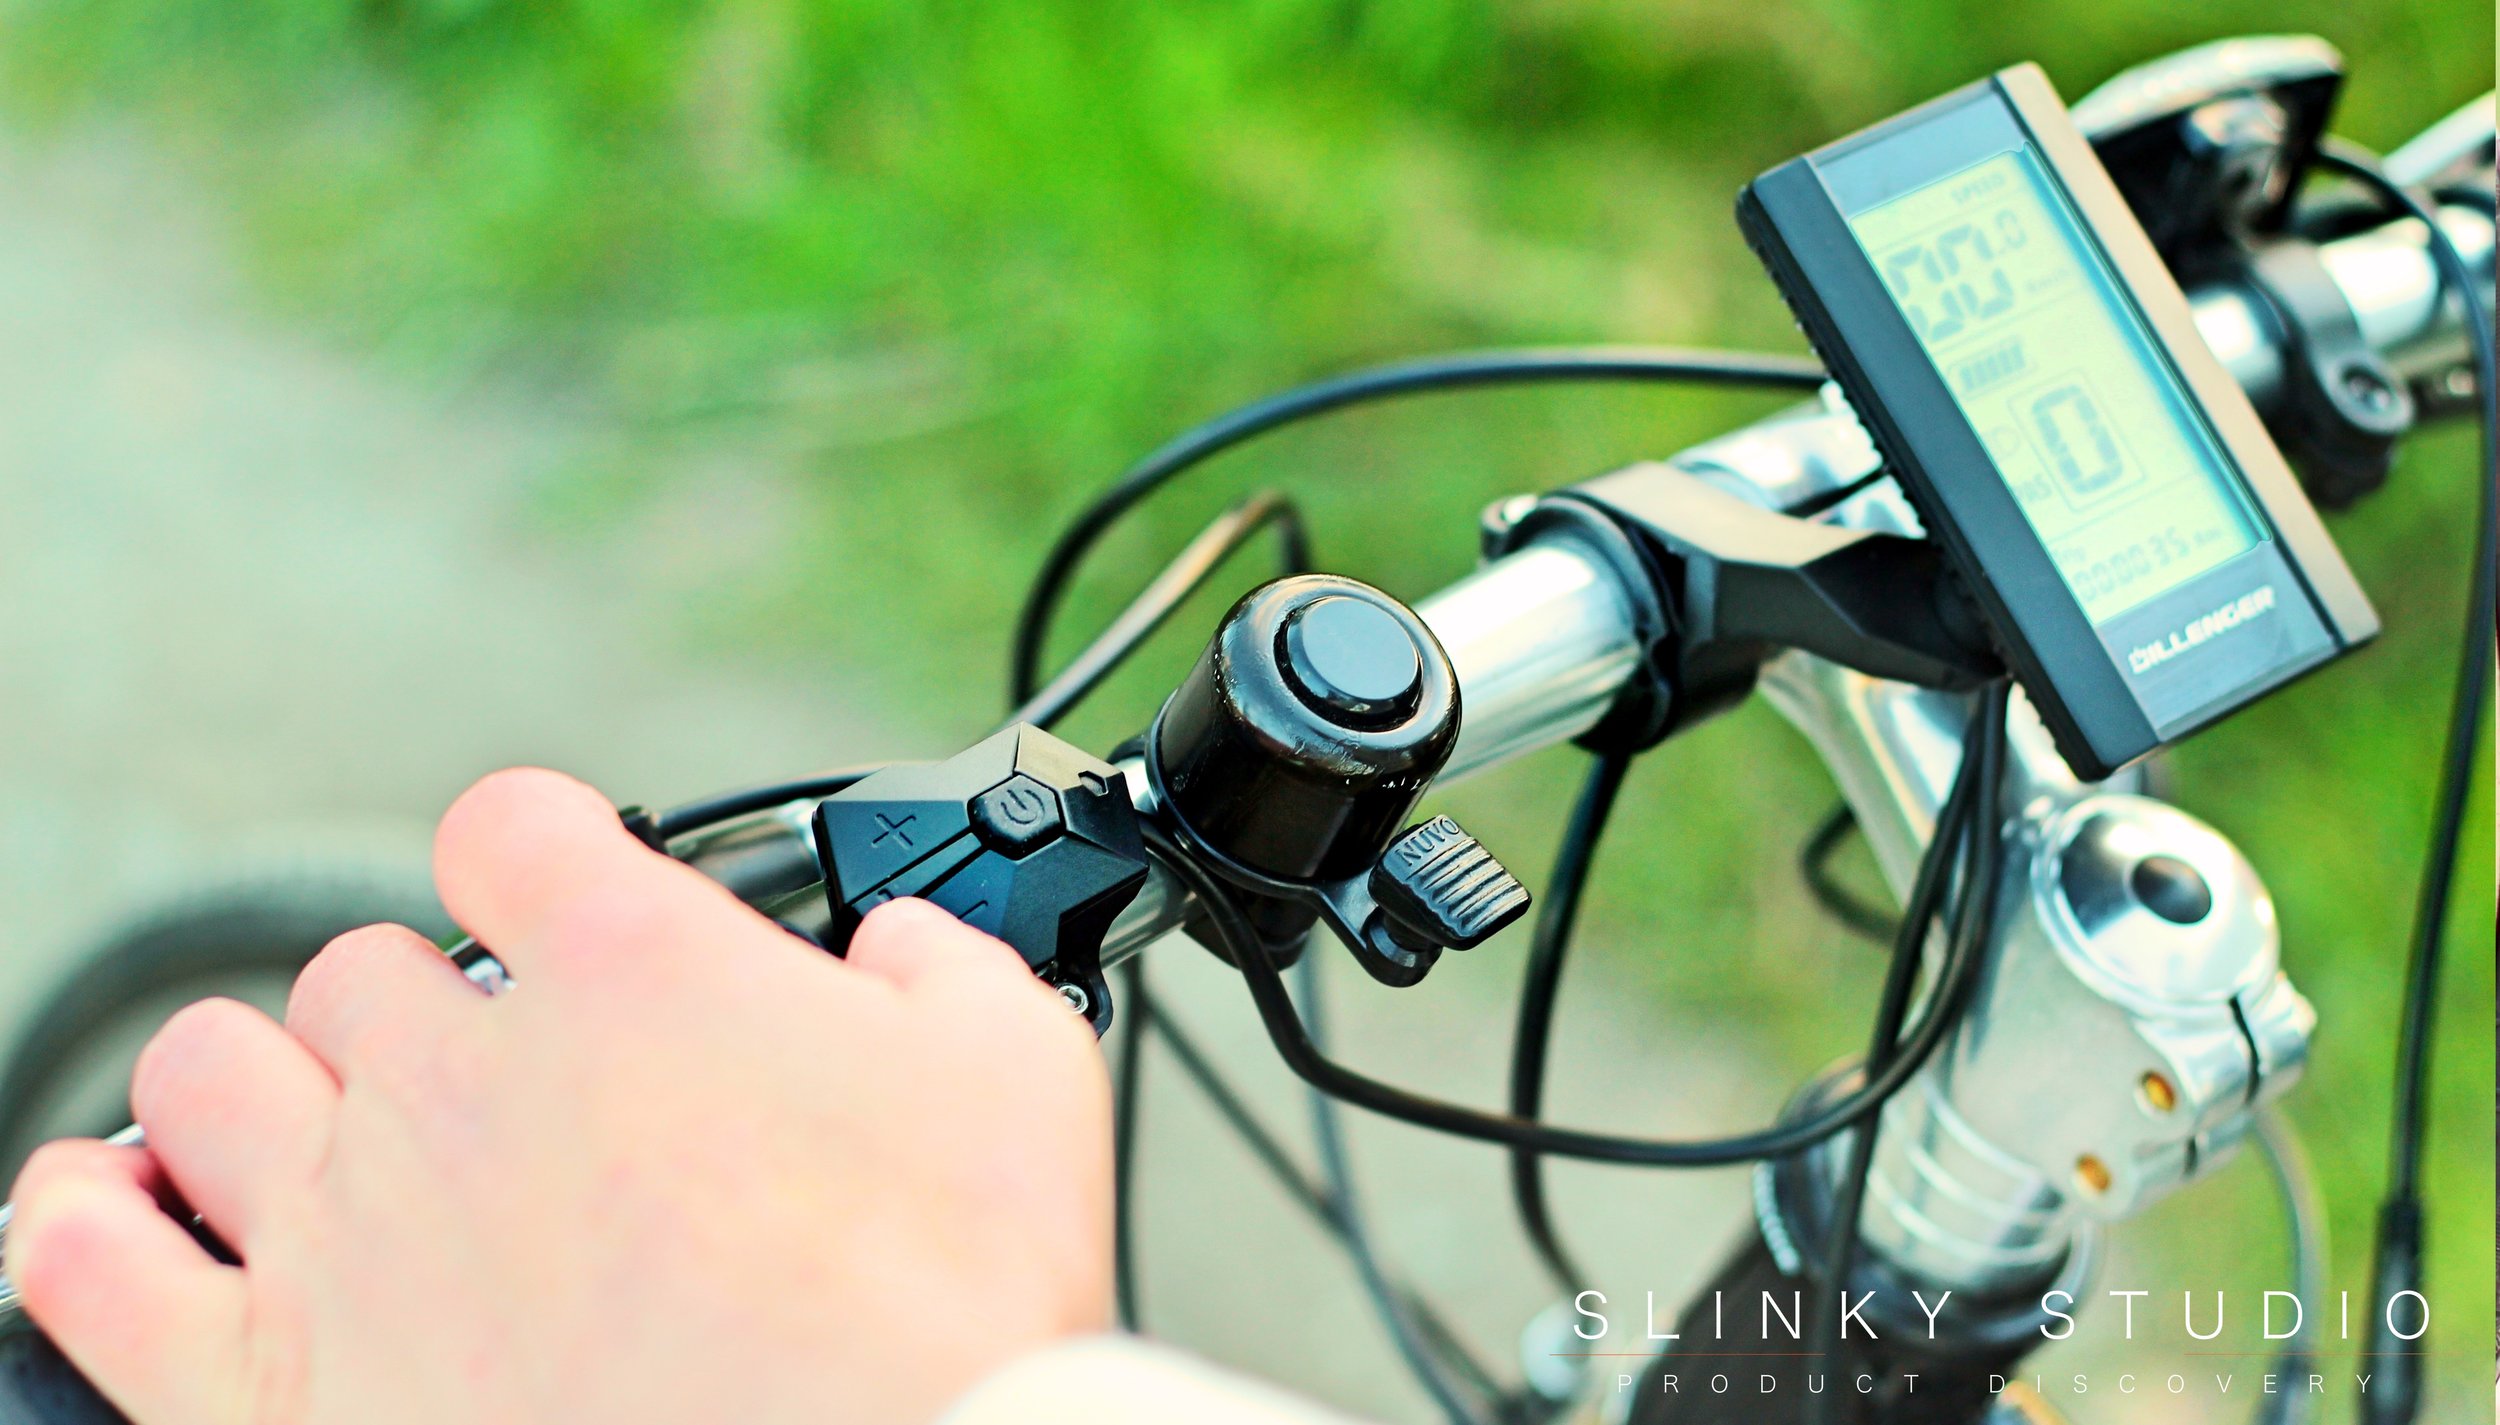 Dillenger Street Legal eBike Conversion Kit Changing Pedal Assist Mode via Control.jpg